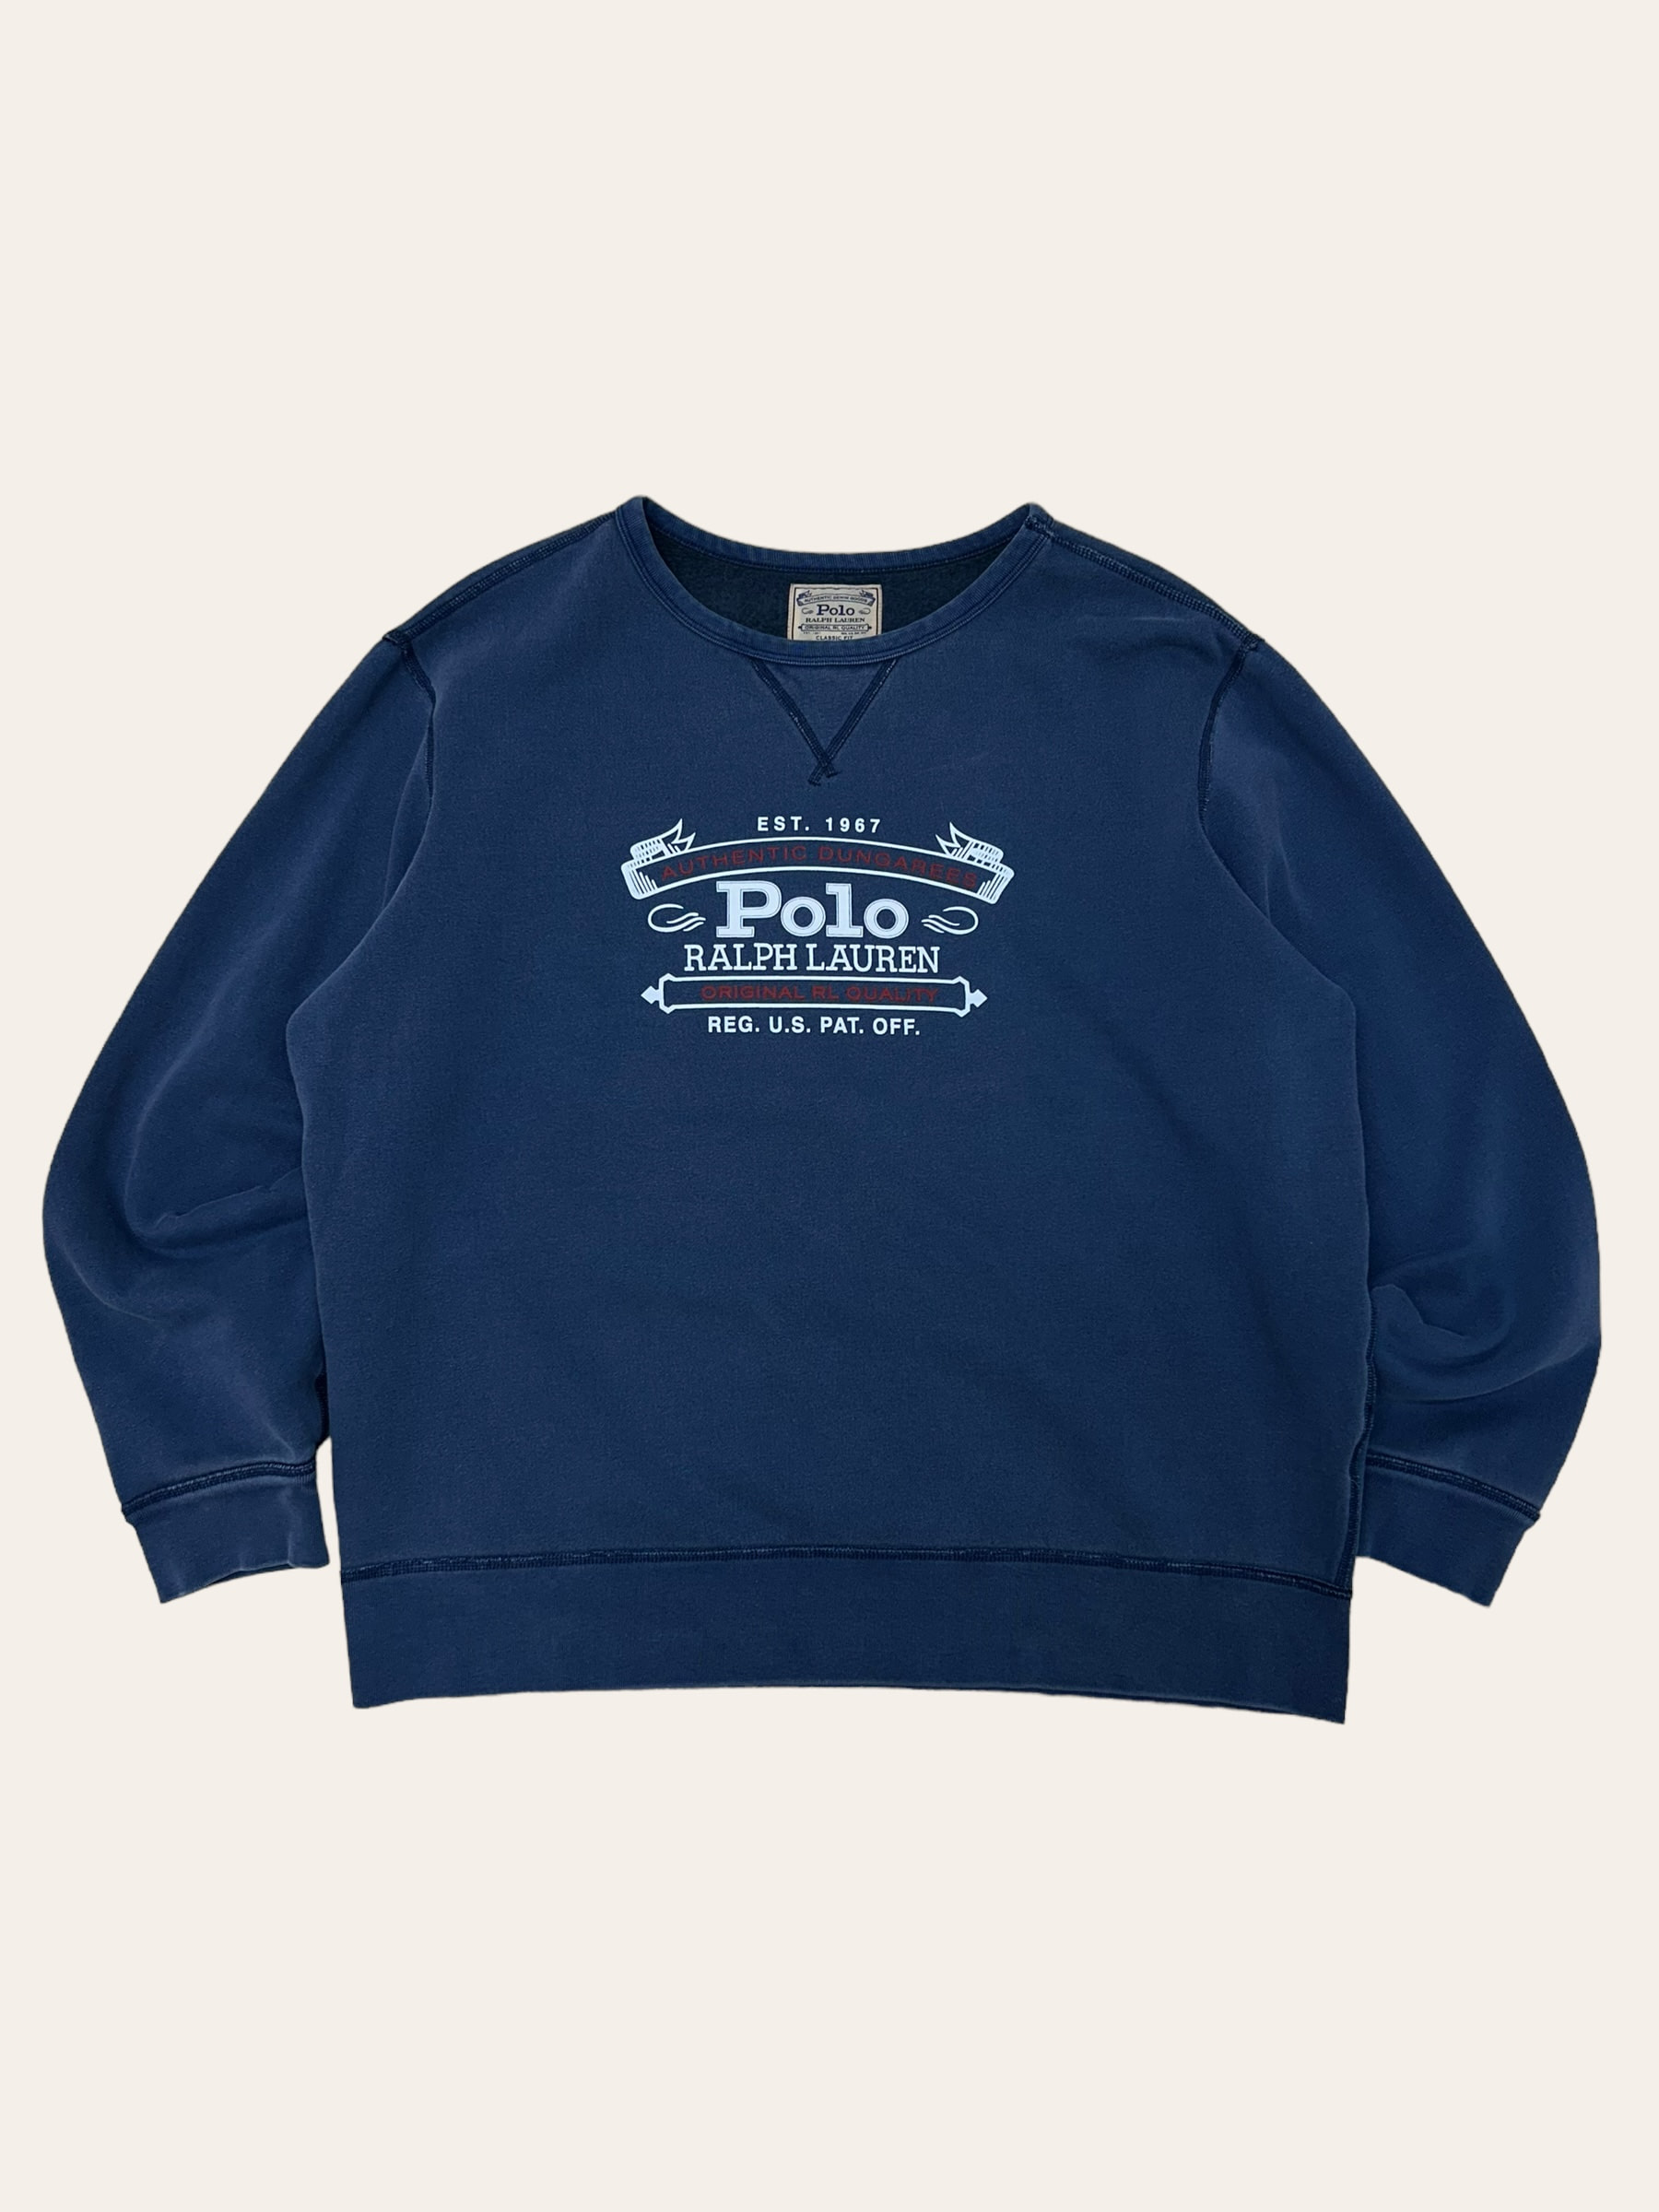 Polo ralph lauren faded blue printing sweatshirt XL